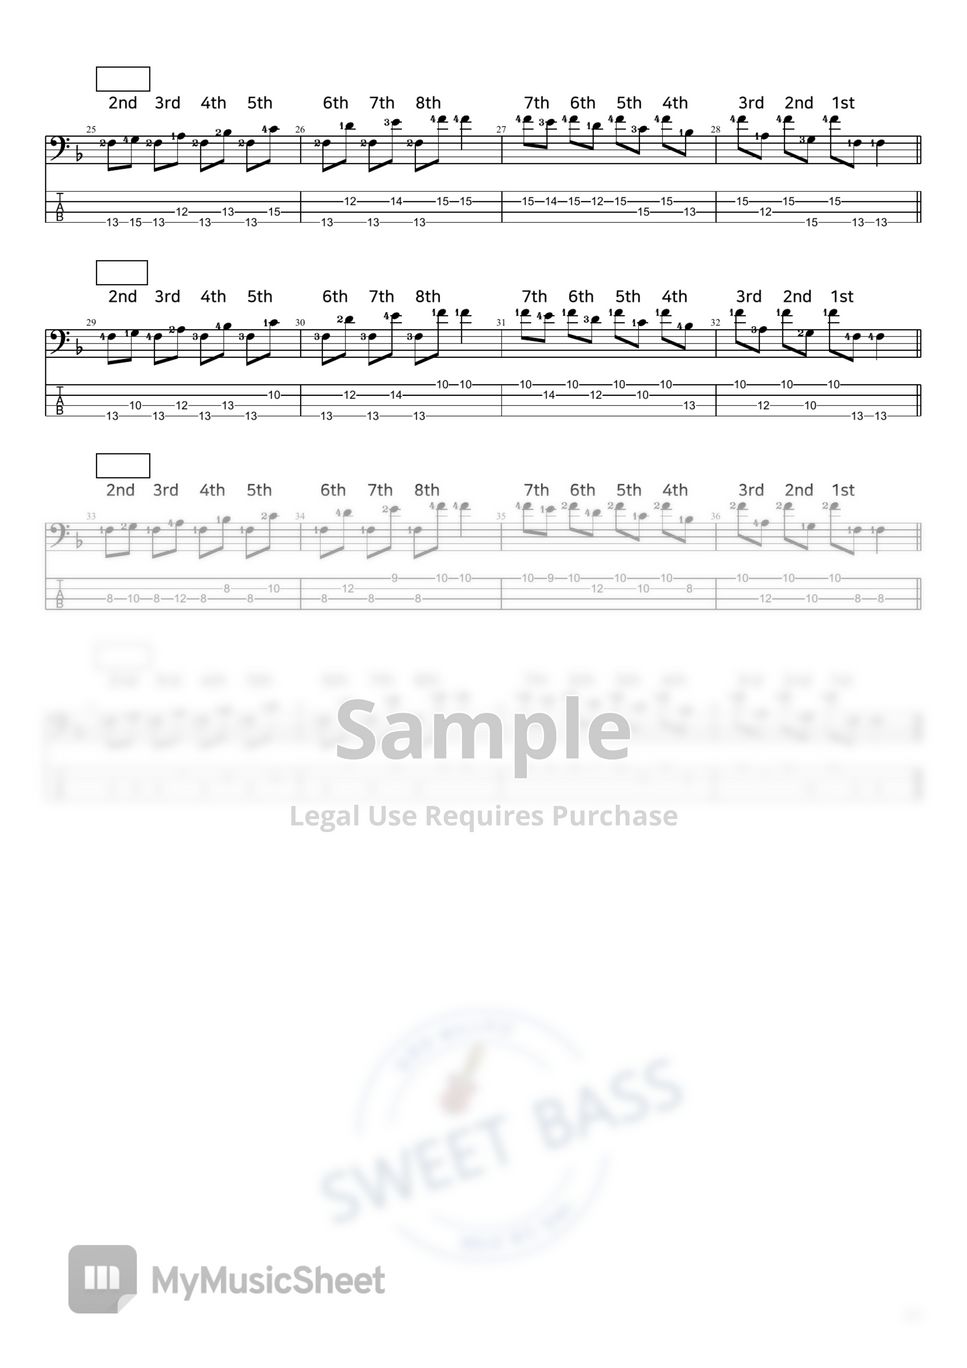 Sweet Bass - 음정 연습 5가지 폼 MR 포함 INTERVAL practice 5 Forms (Bass)